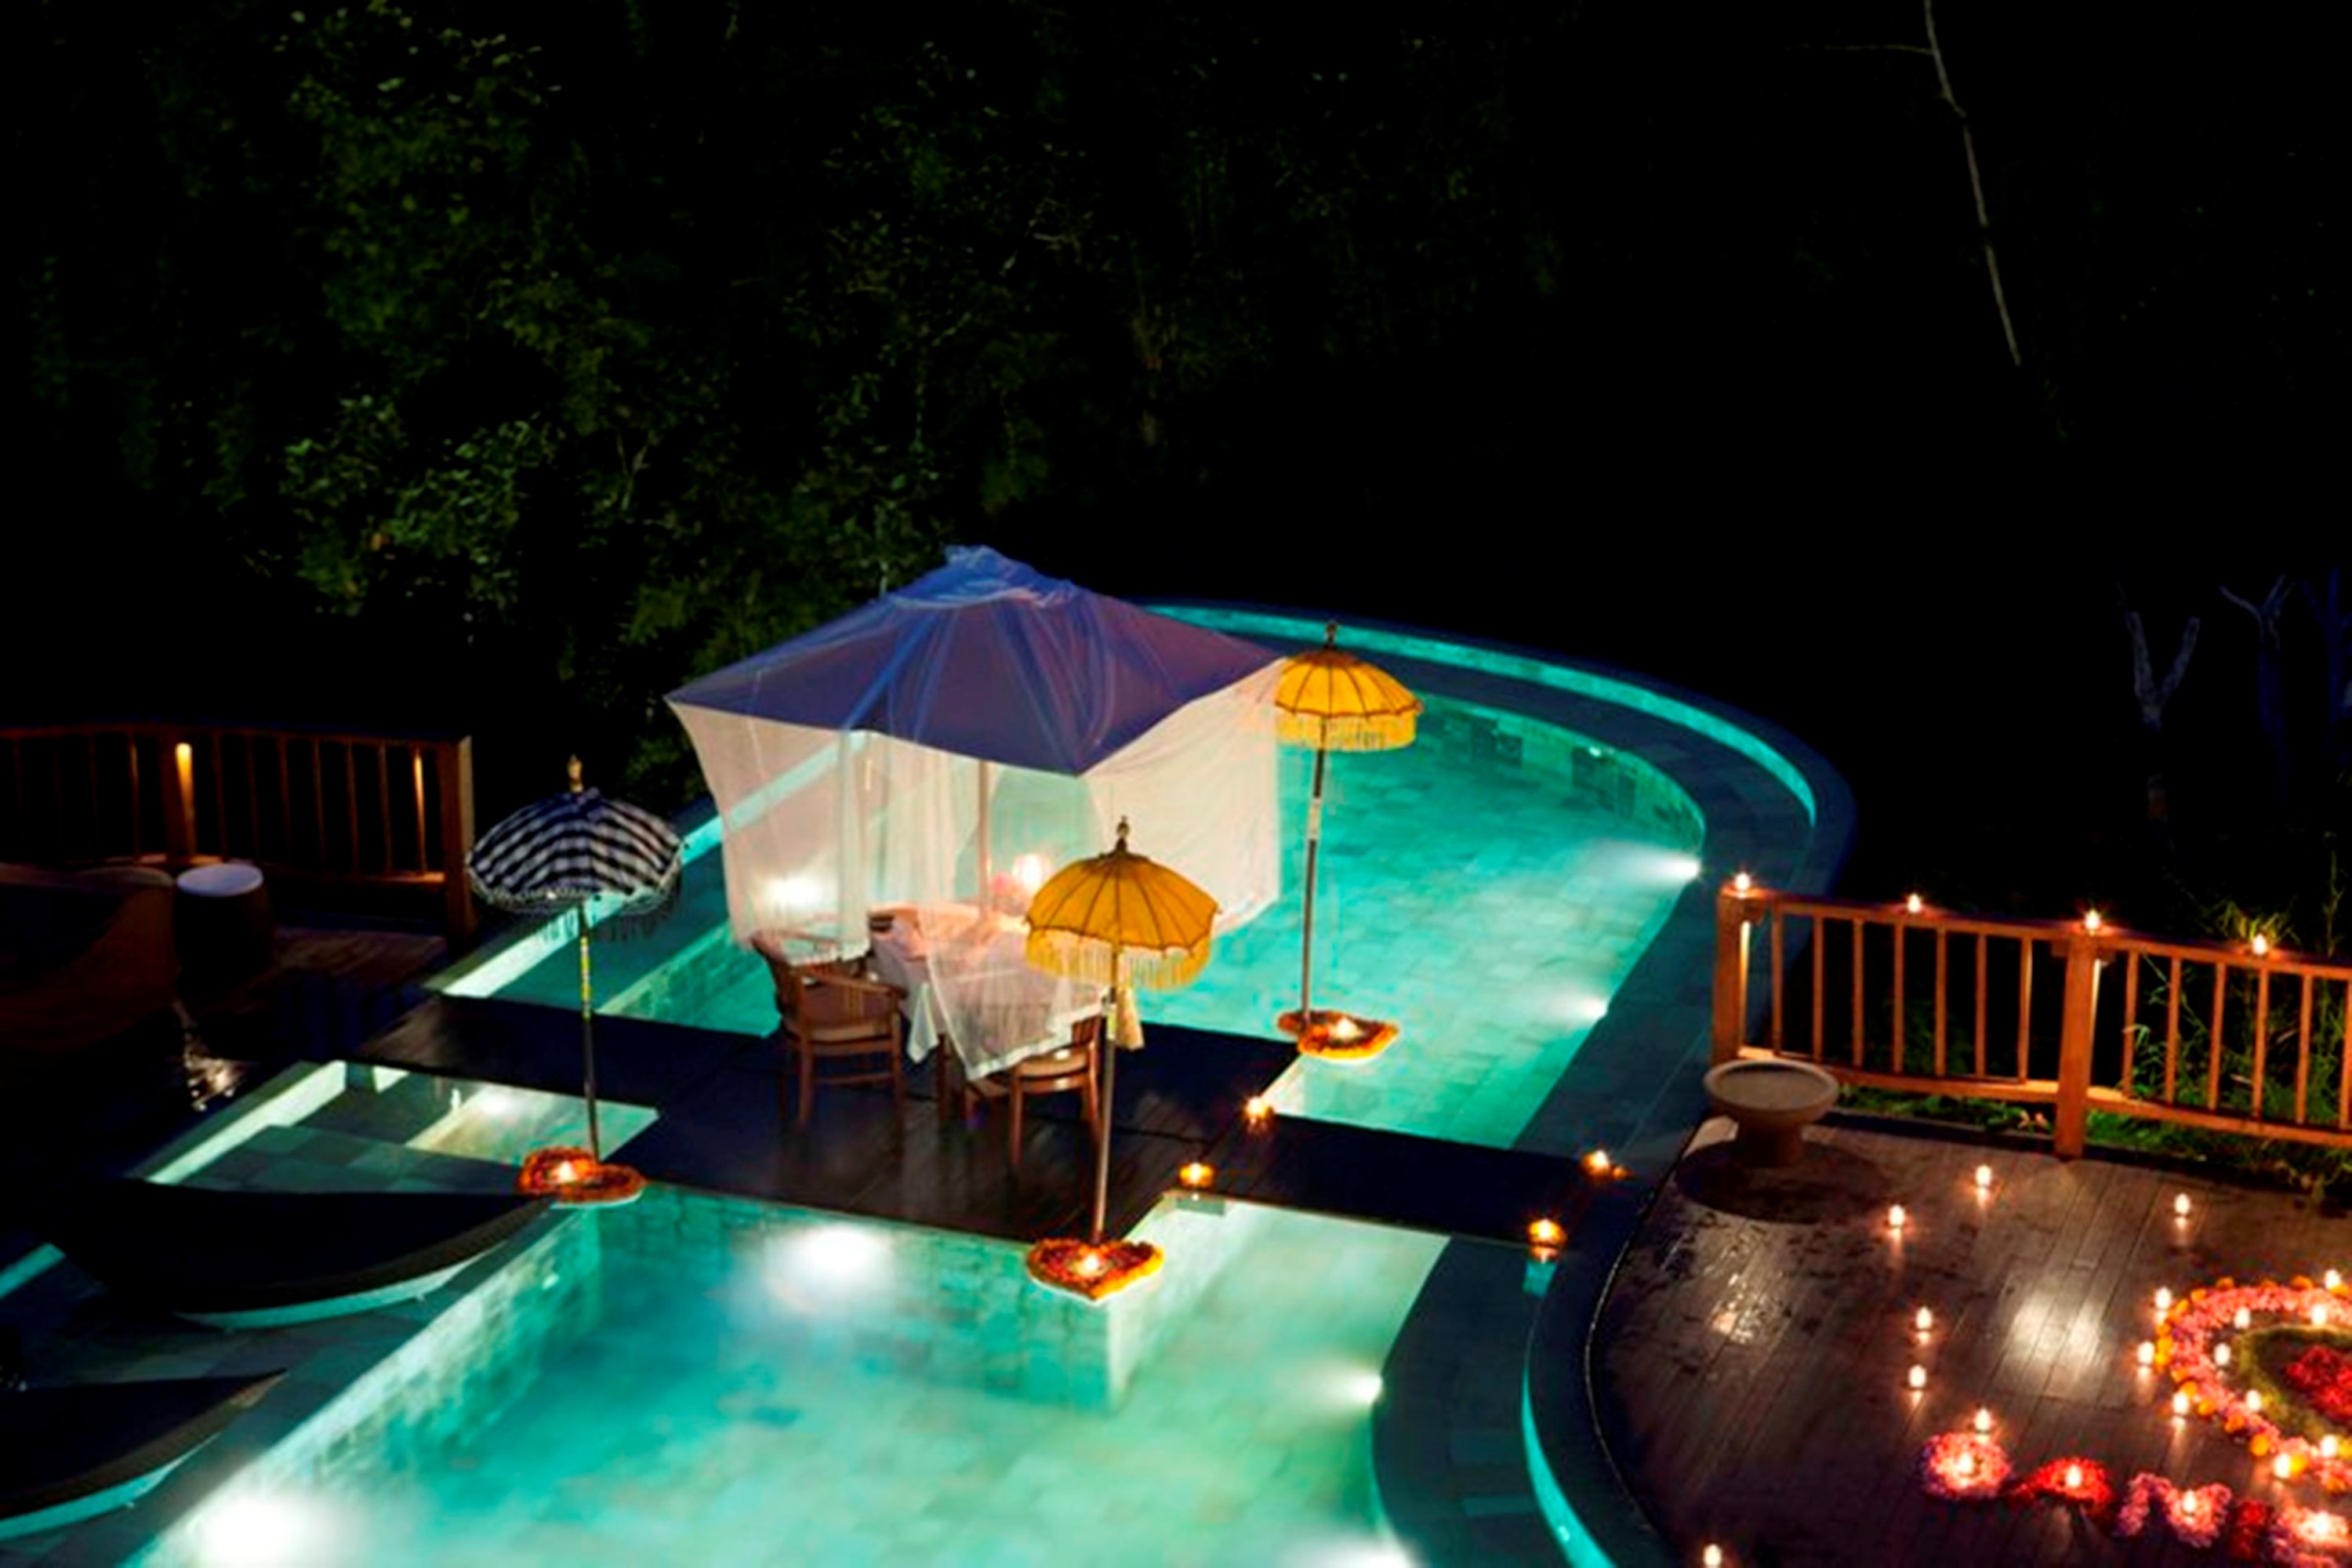 Bali Romantic Getaway Spot - Honeymoon Packages - 7 Days 6 Nights